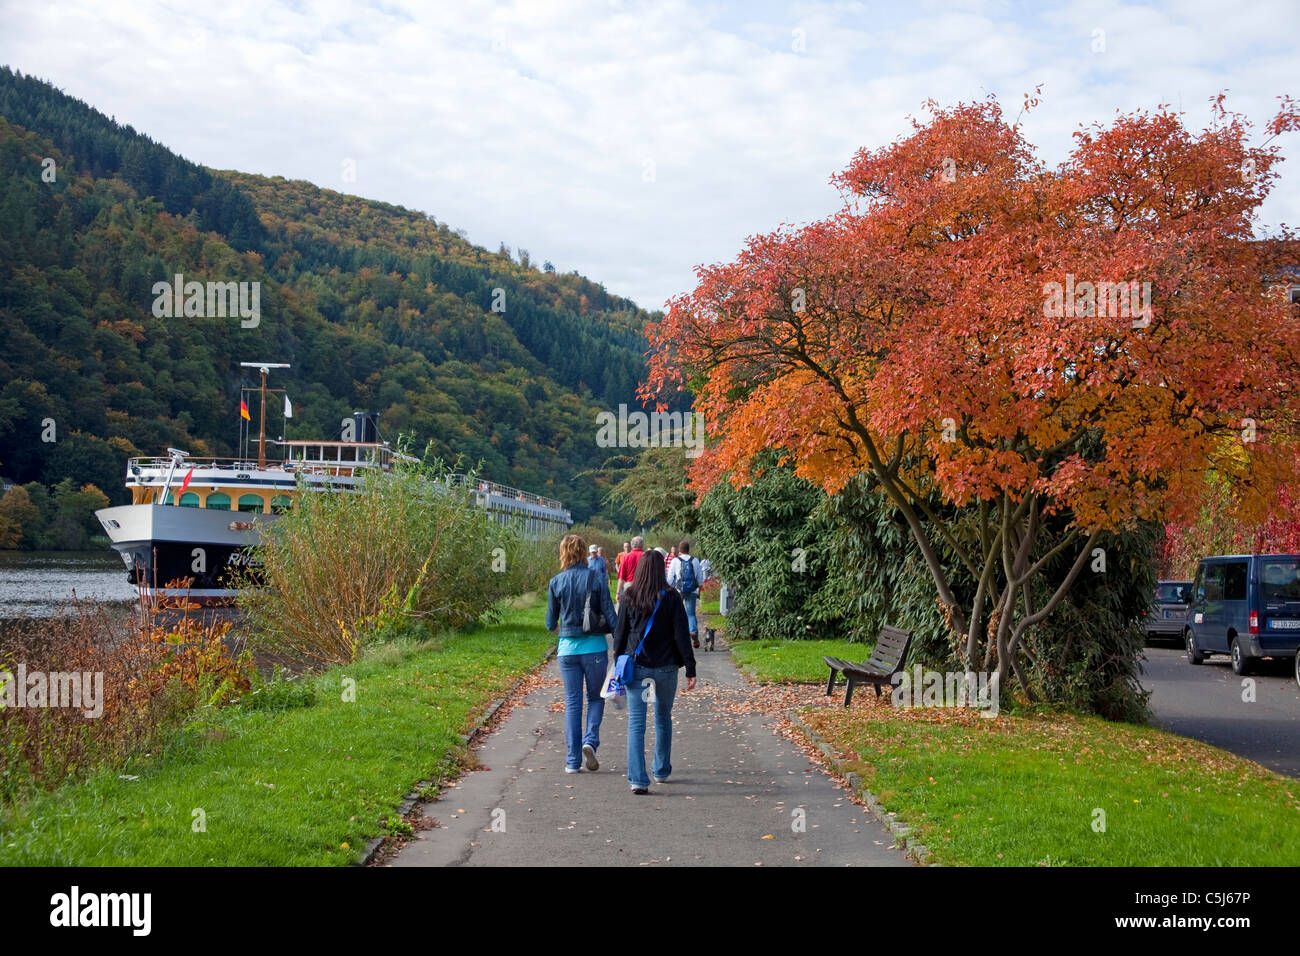 Herbstimmung, Menschen der Moselpromenade, Moselschiff, Traben-Trarbach, Mosel, Autumn, people walking at the Moselle promenade Stock Photo